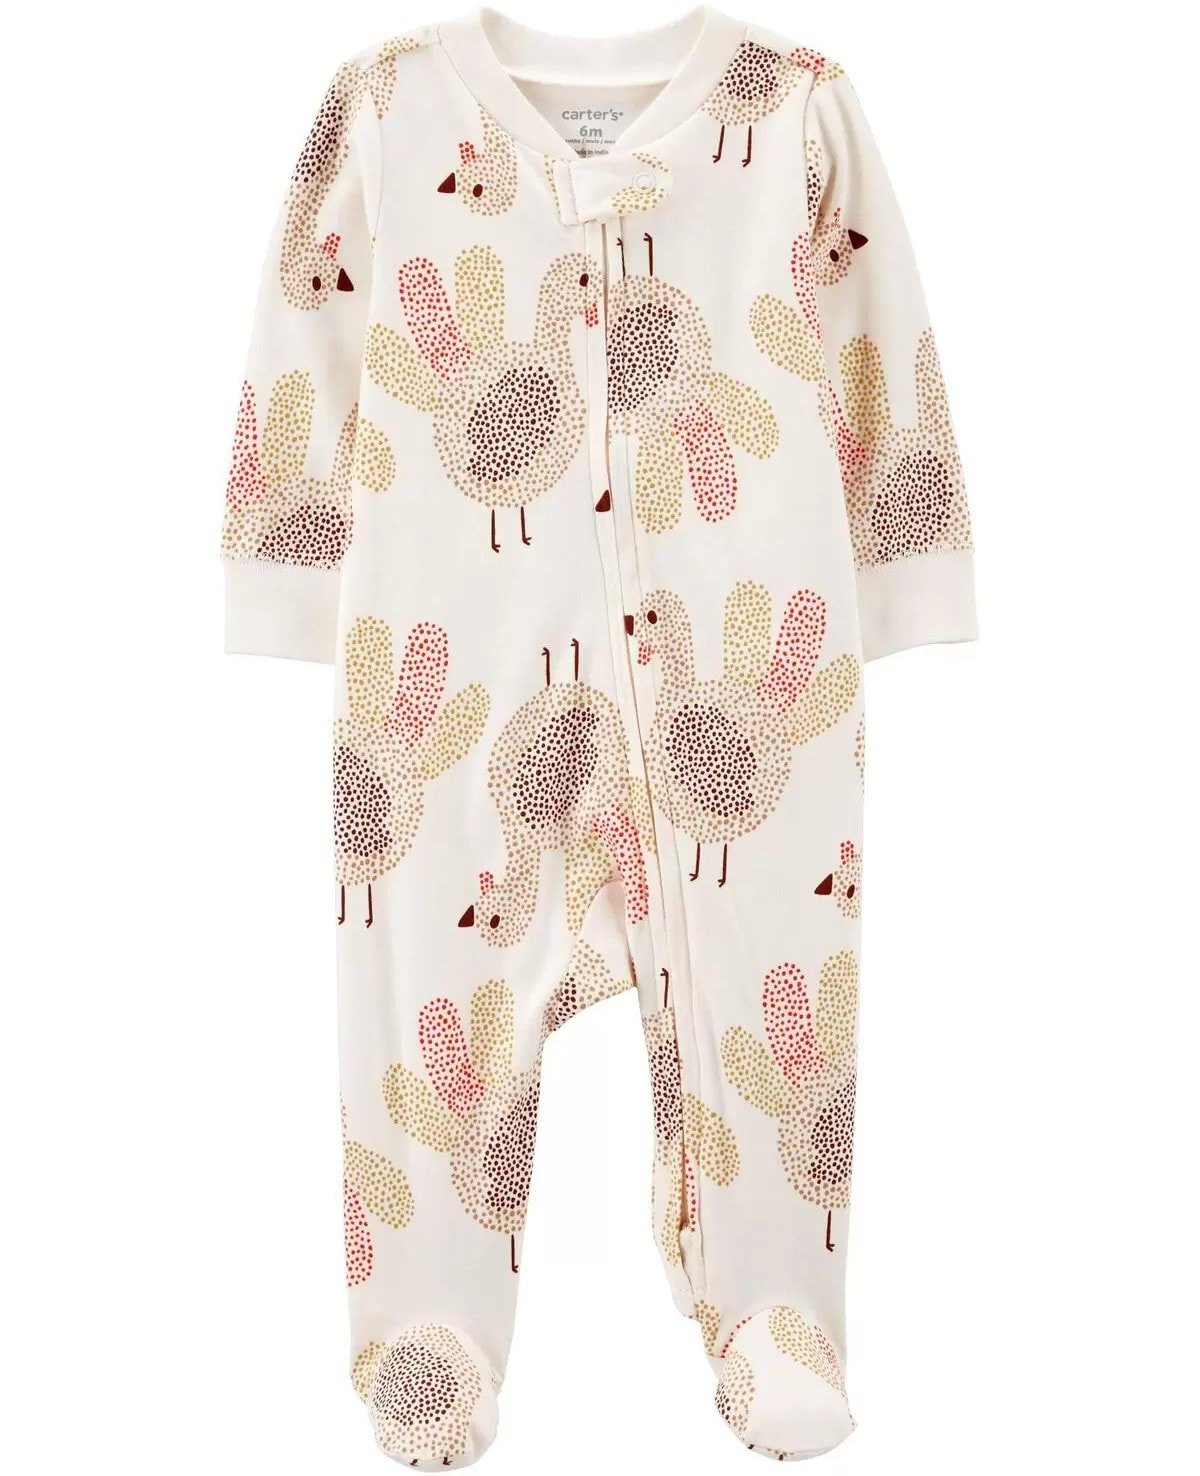 Carter's Baby Turkey Two-Way Cotton Zip Sleep and Play Pajamas